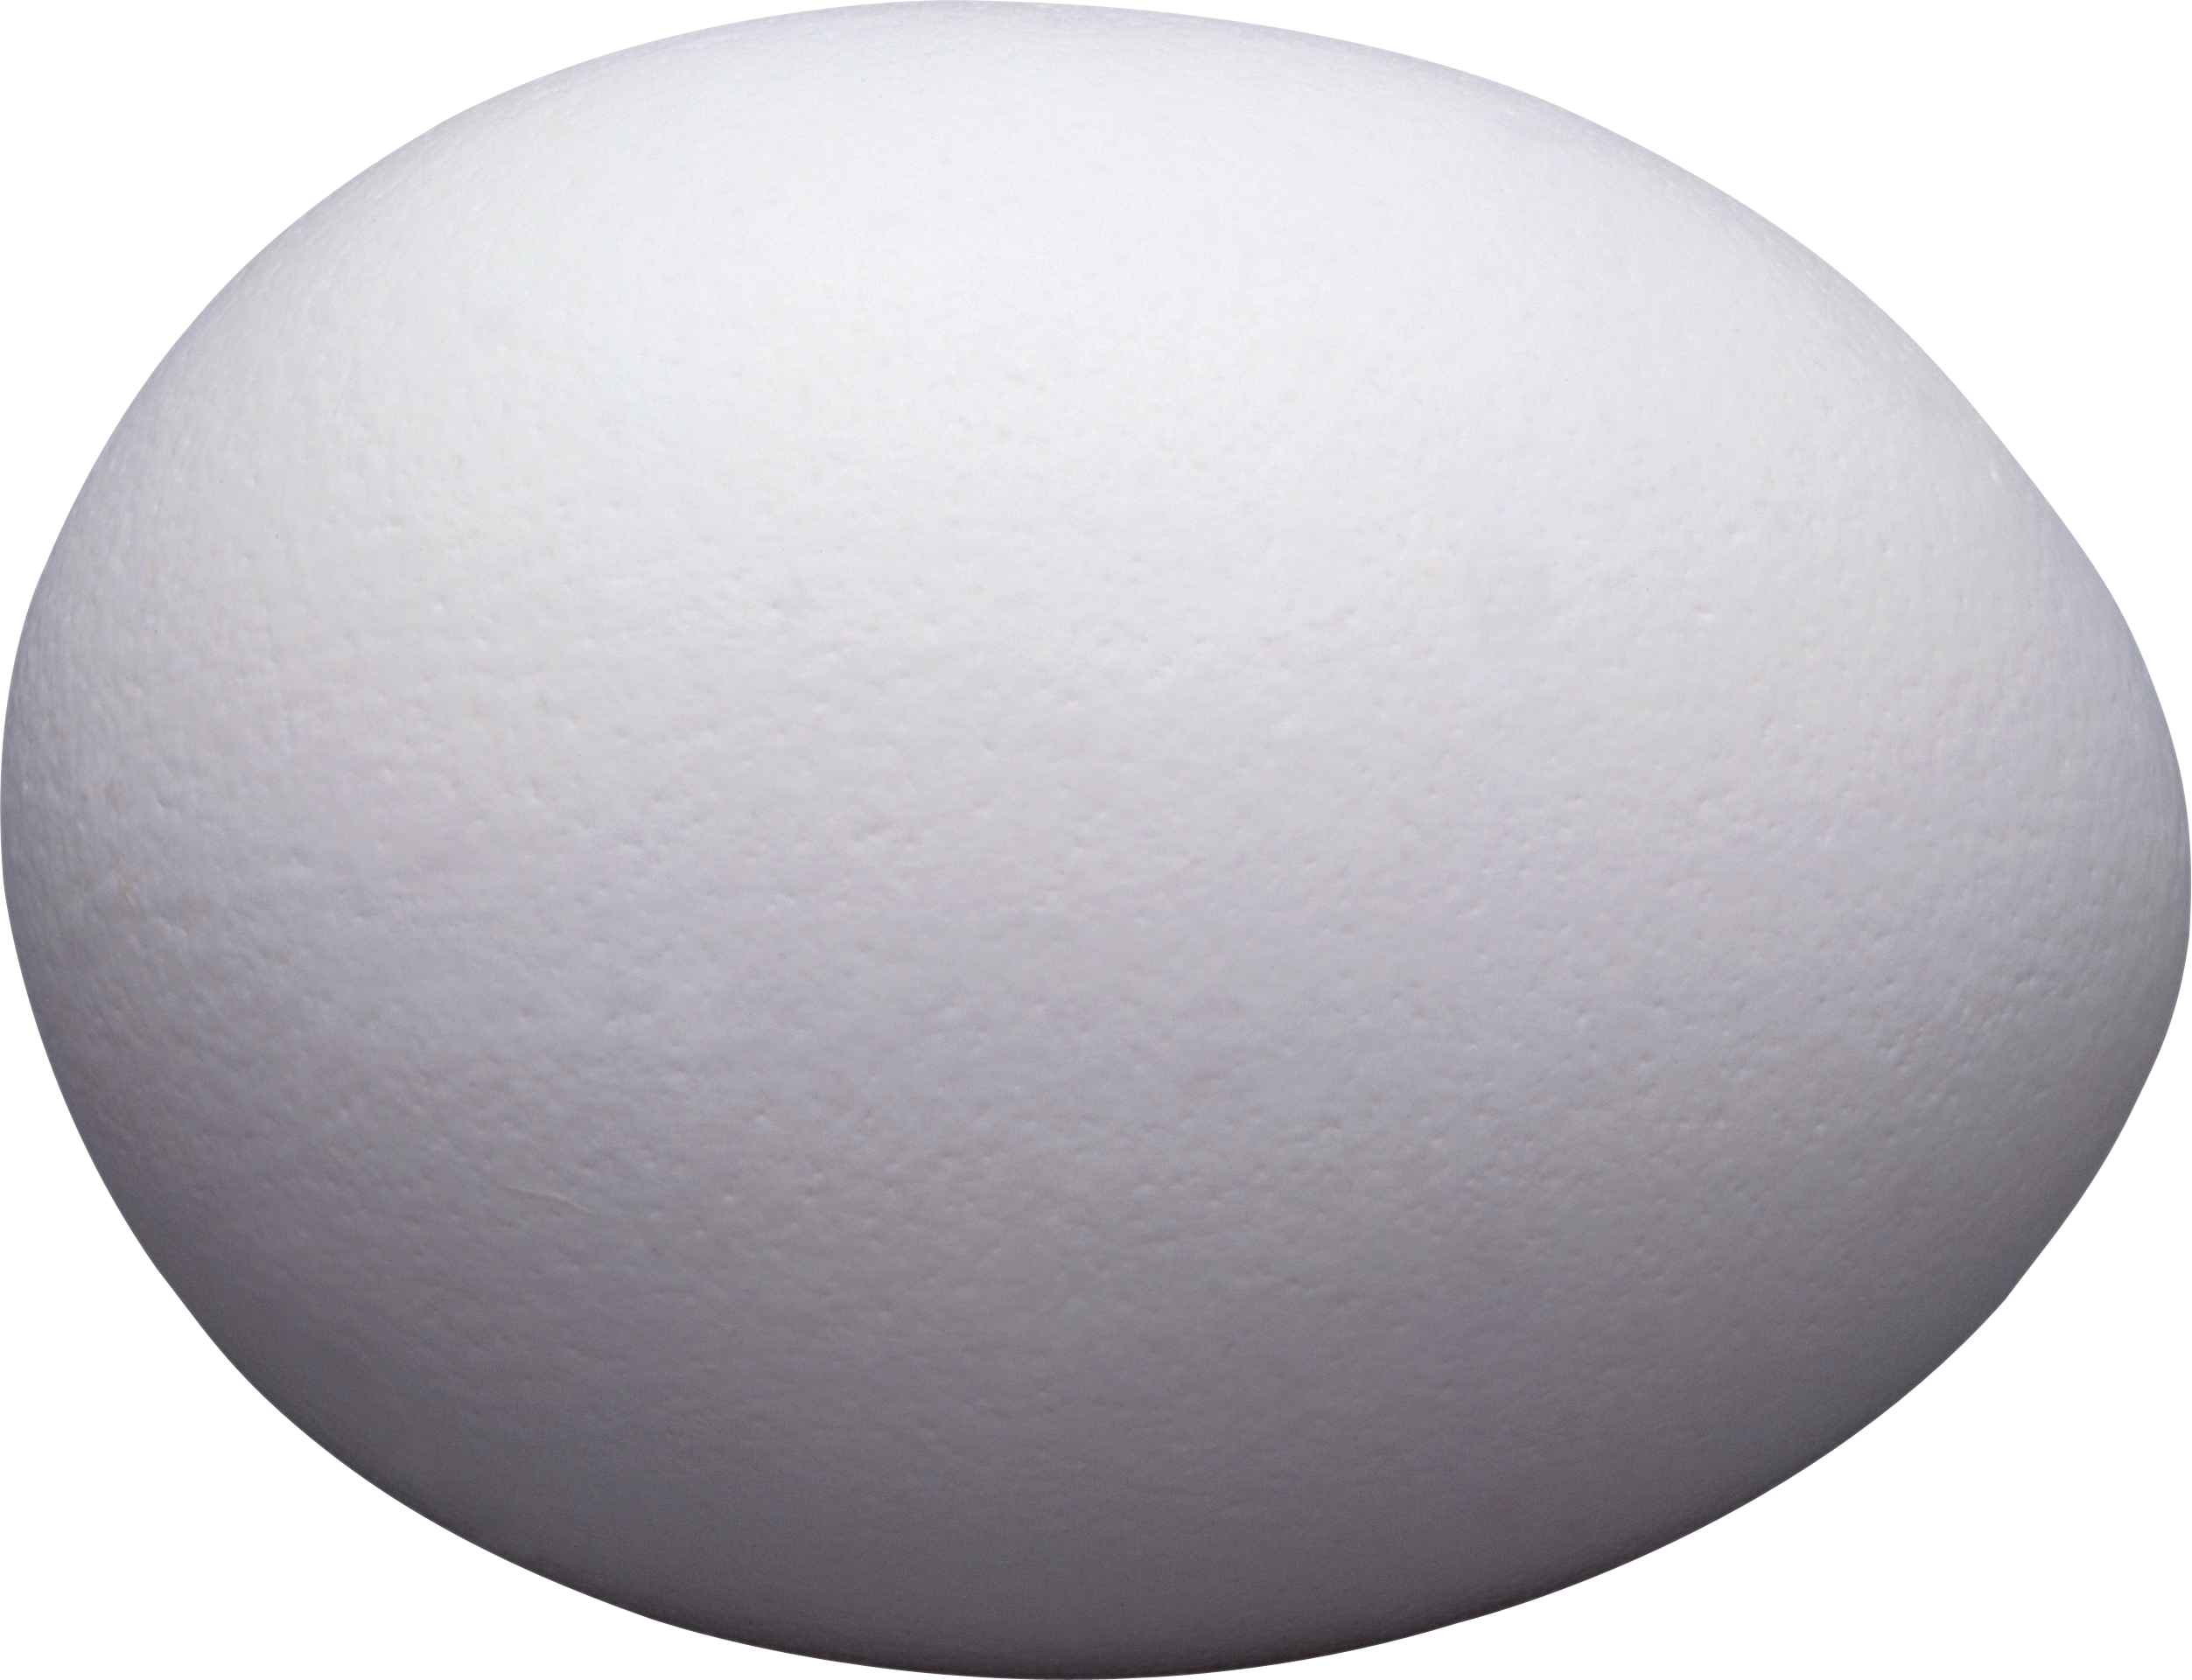 Trứng trắng